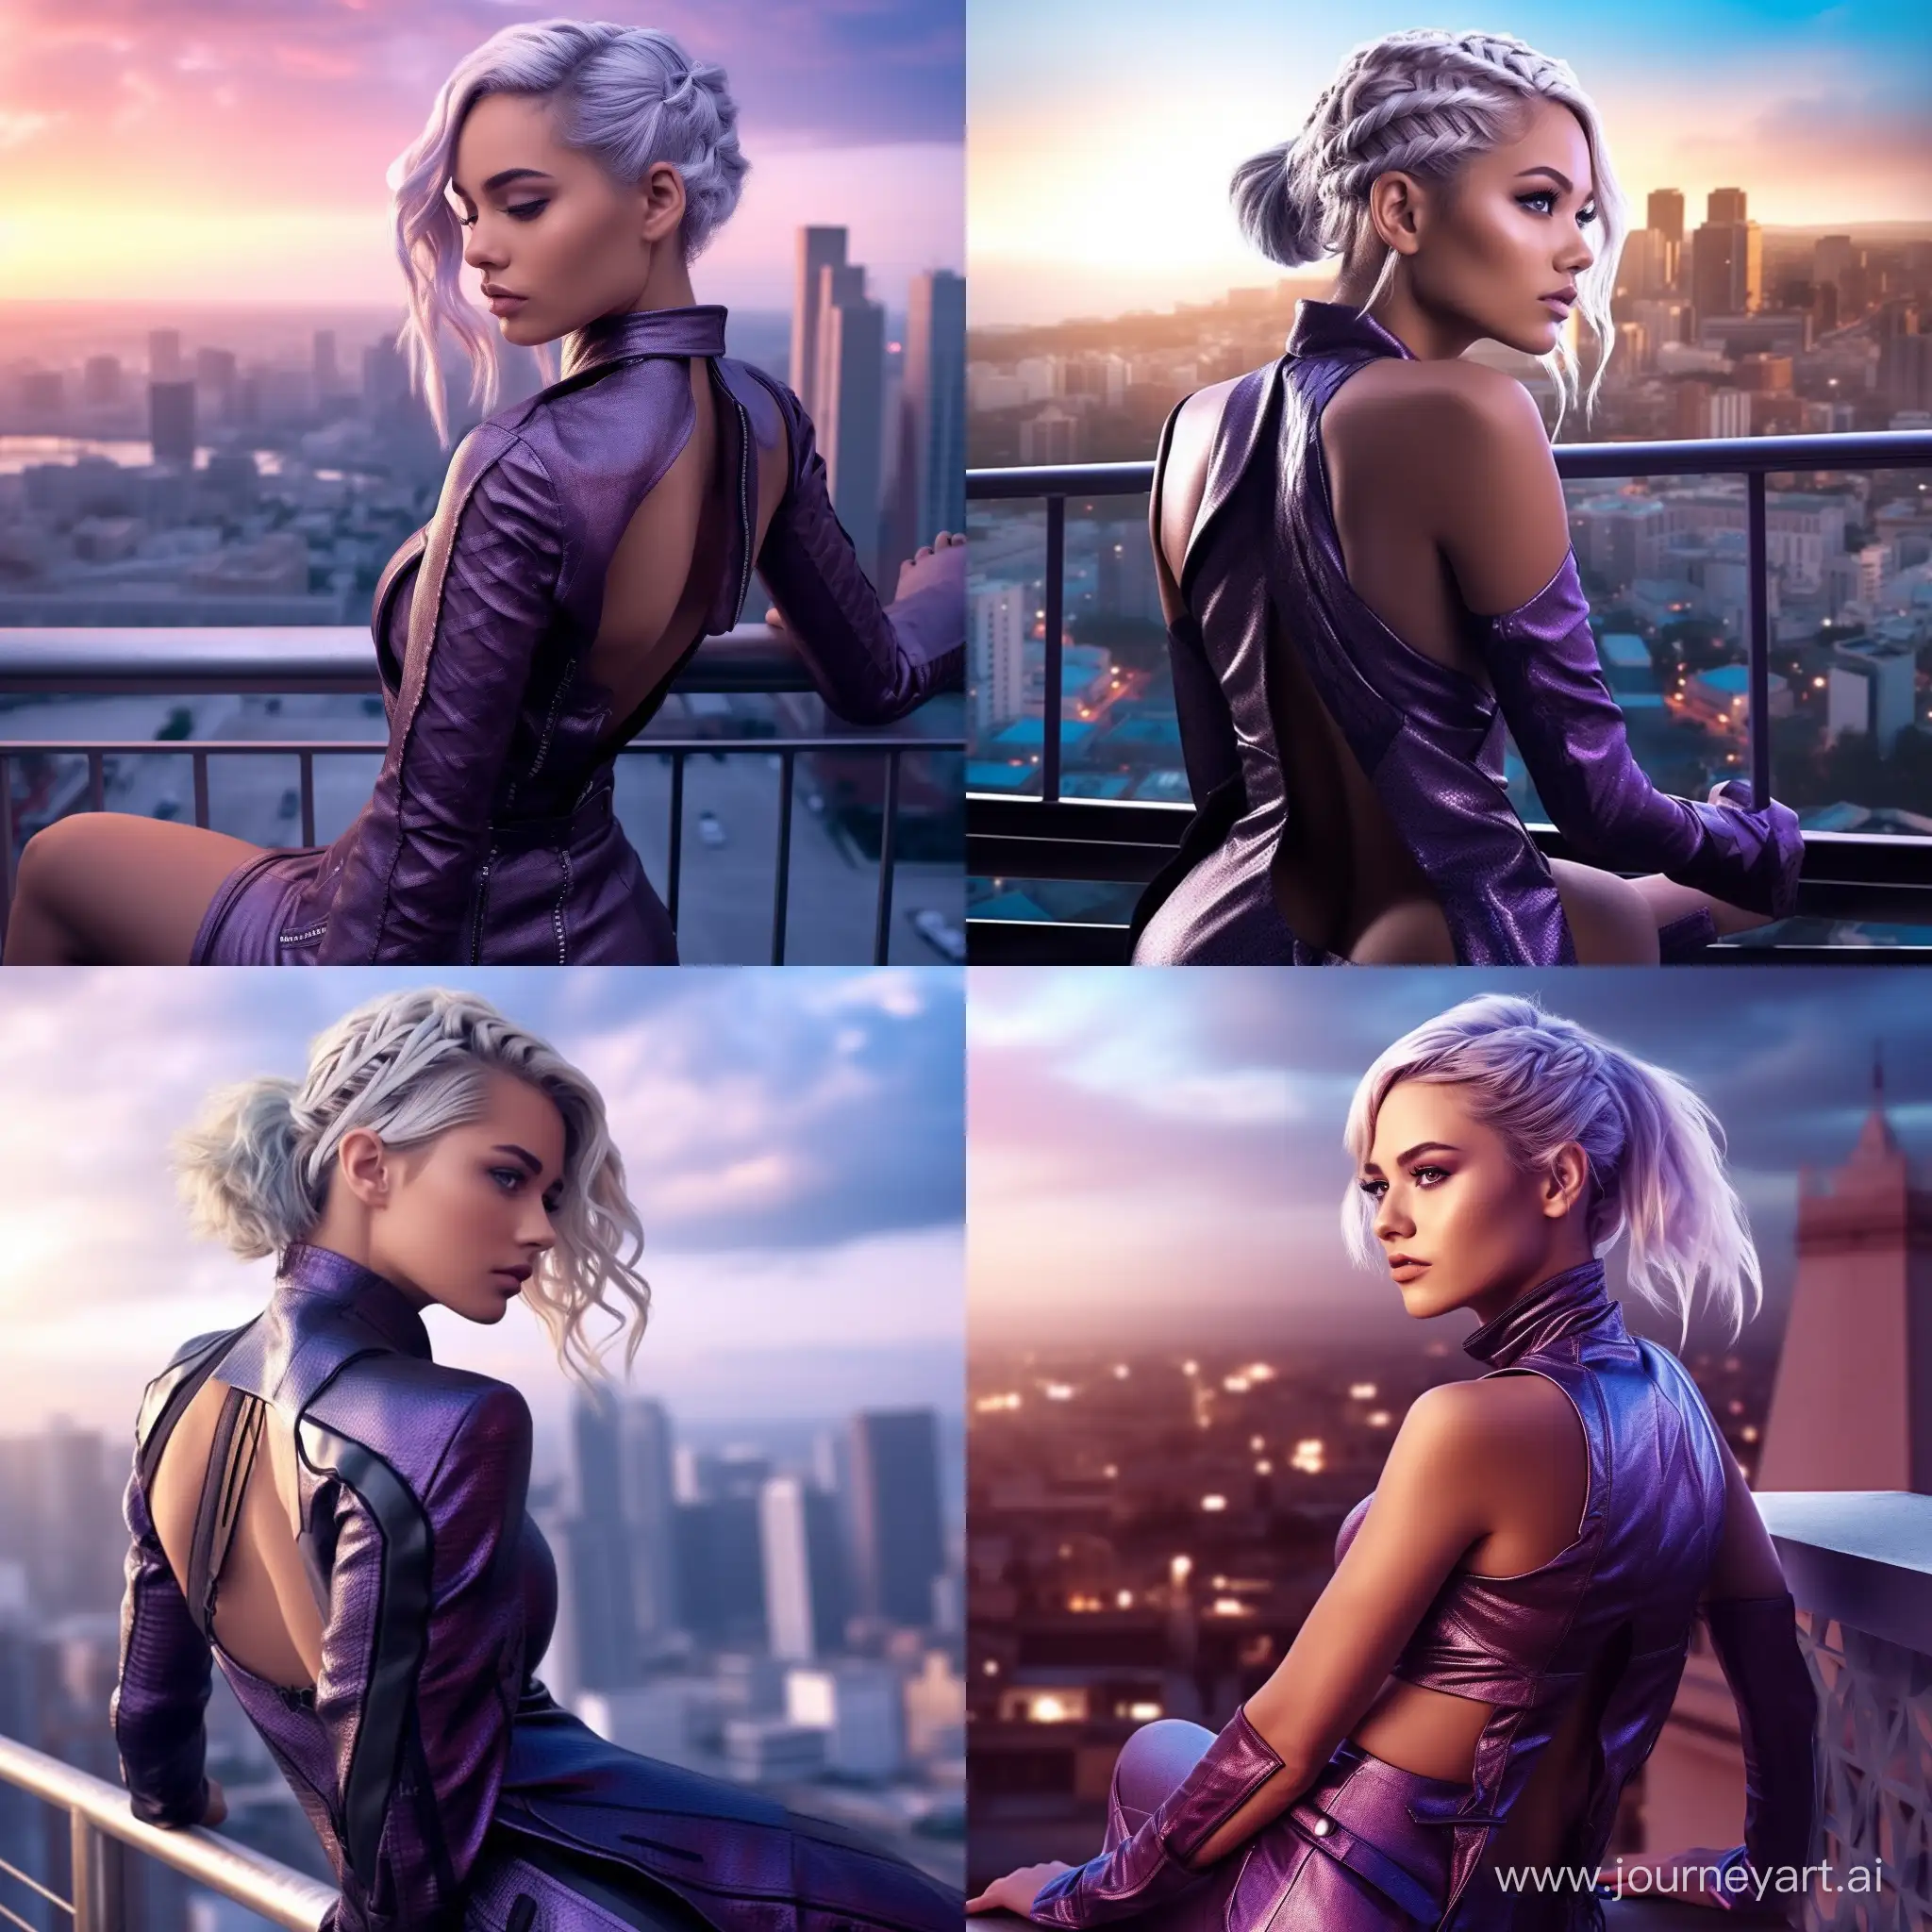 Futuristic-Daenerys-Targaryen-in-Purple-Micro-Shorts-Overlooking-SciFi-Cityscape